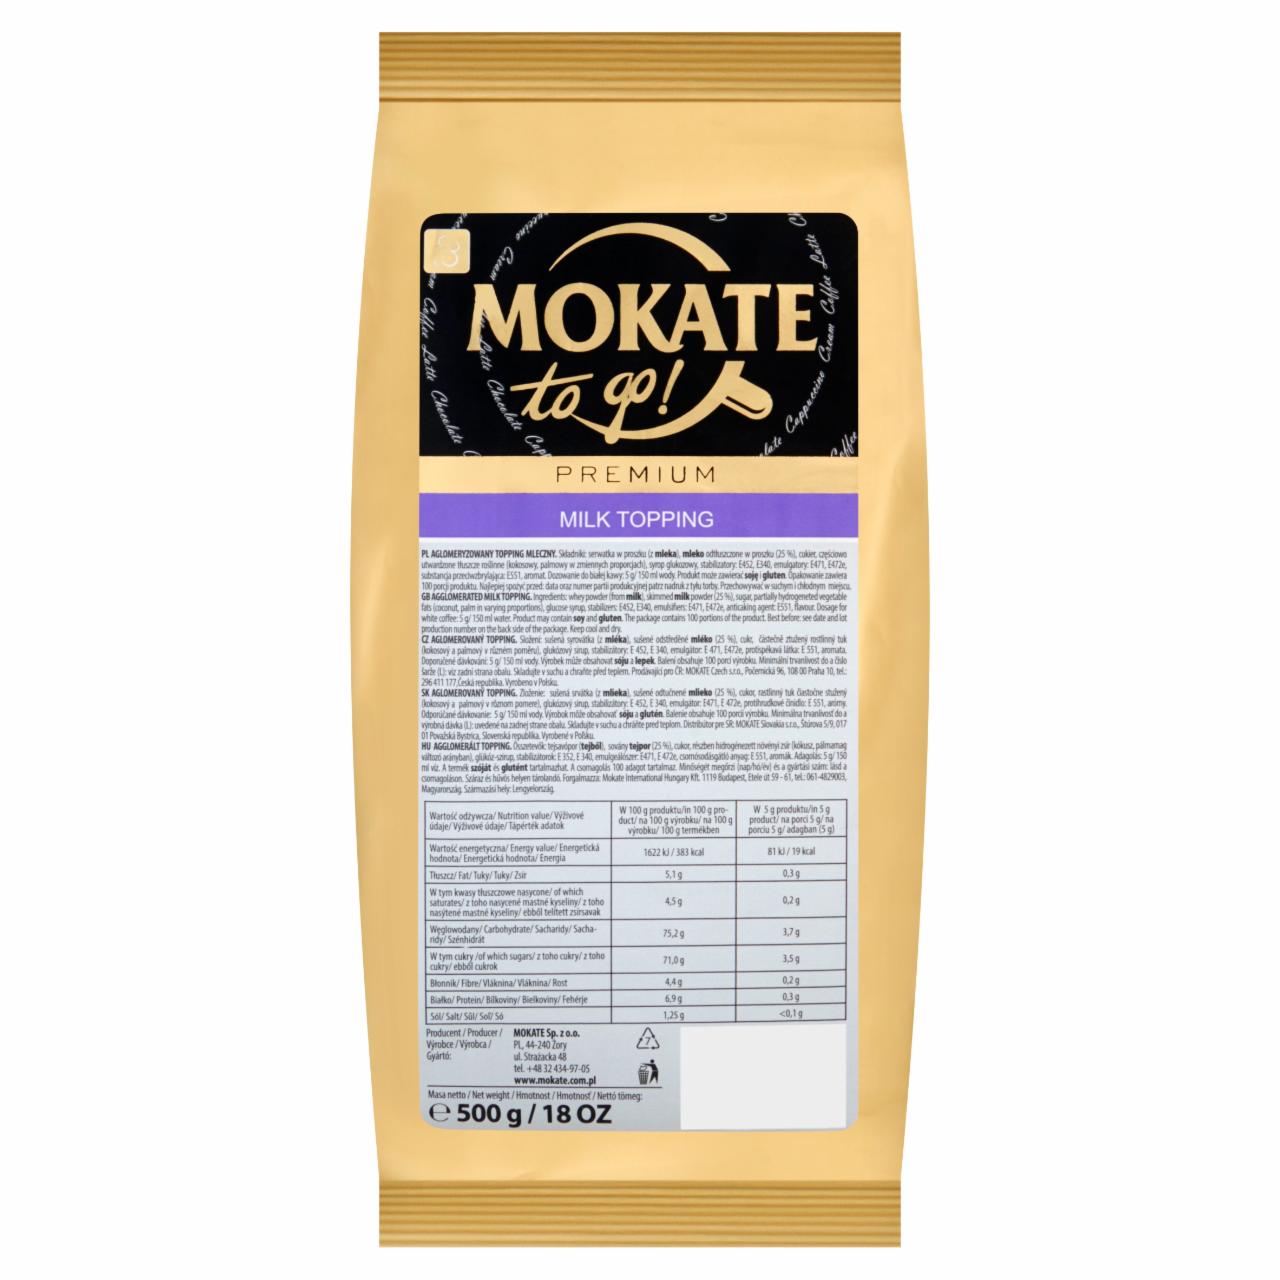 Zdjęcia - Mokate To Go! Premium Topping mleczny 500 g